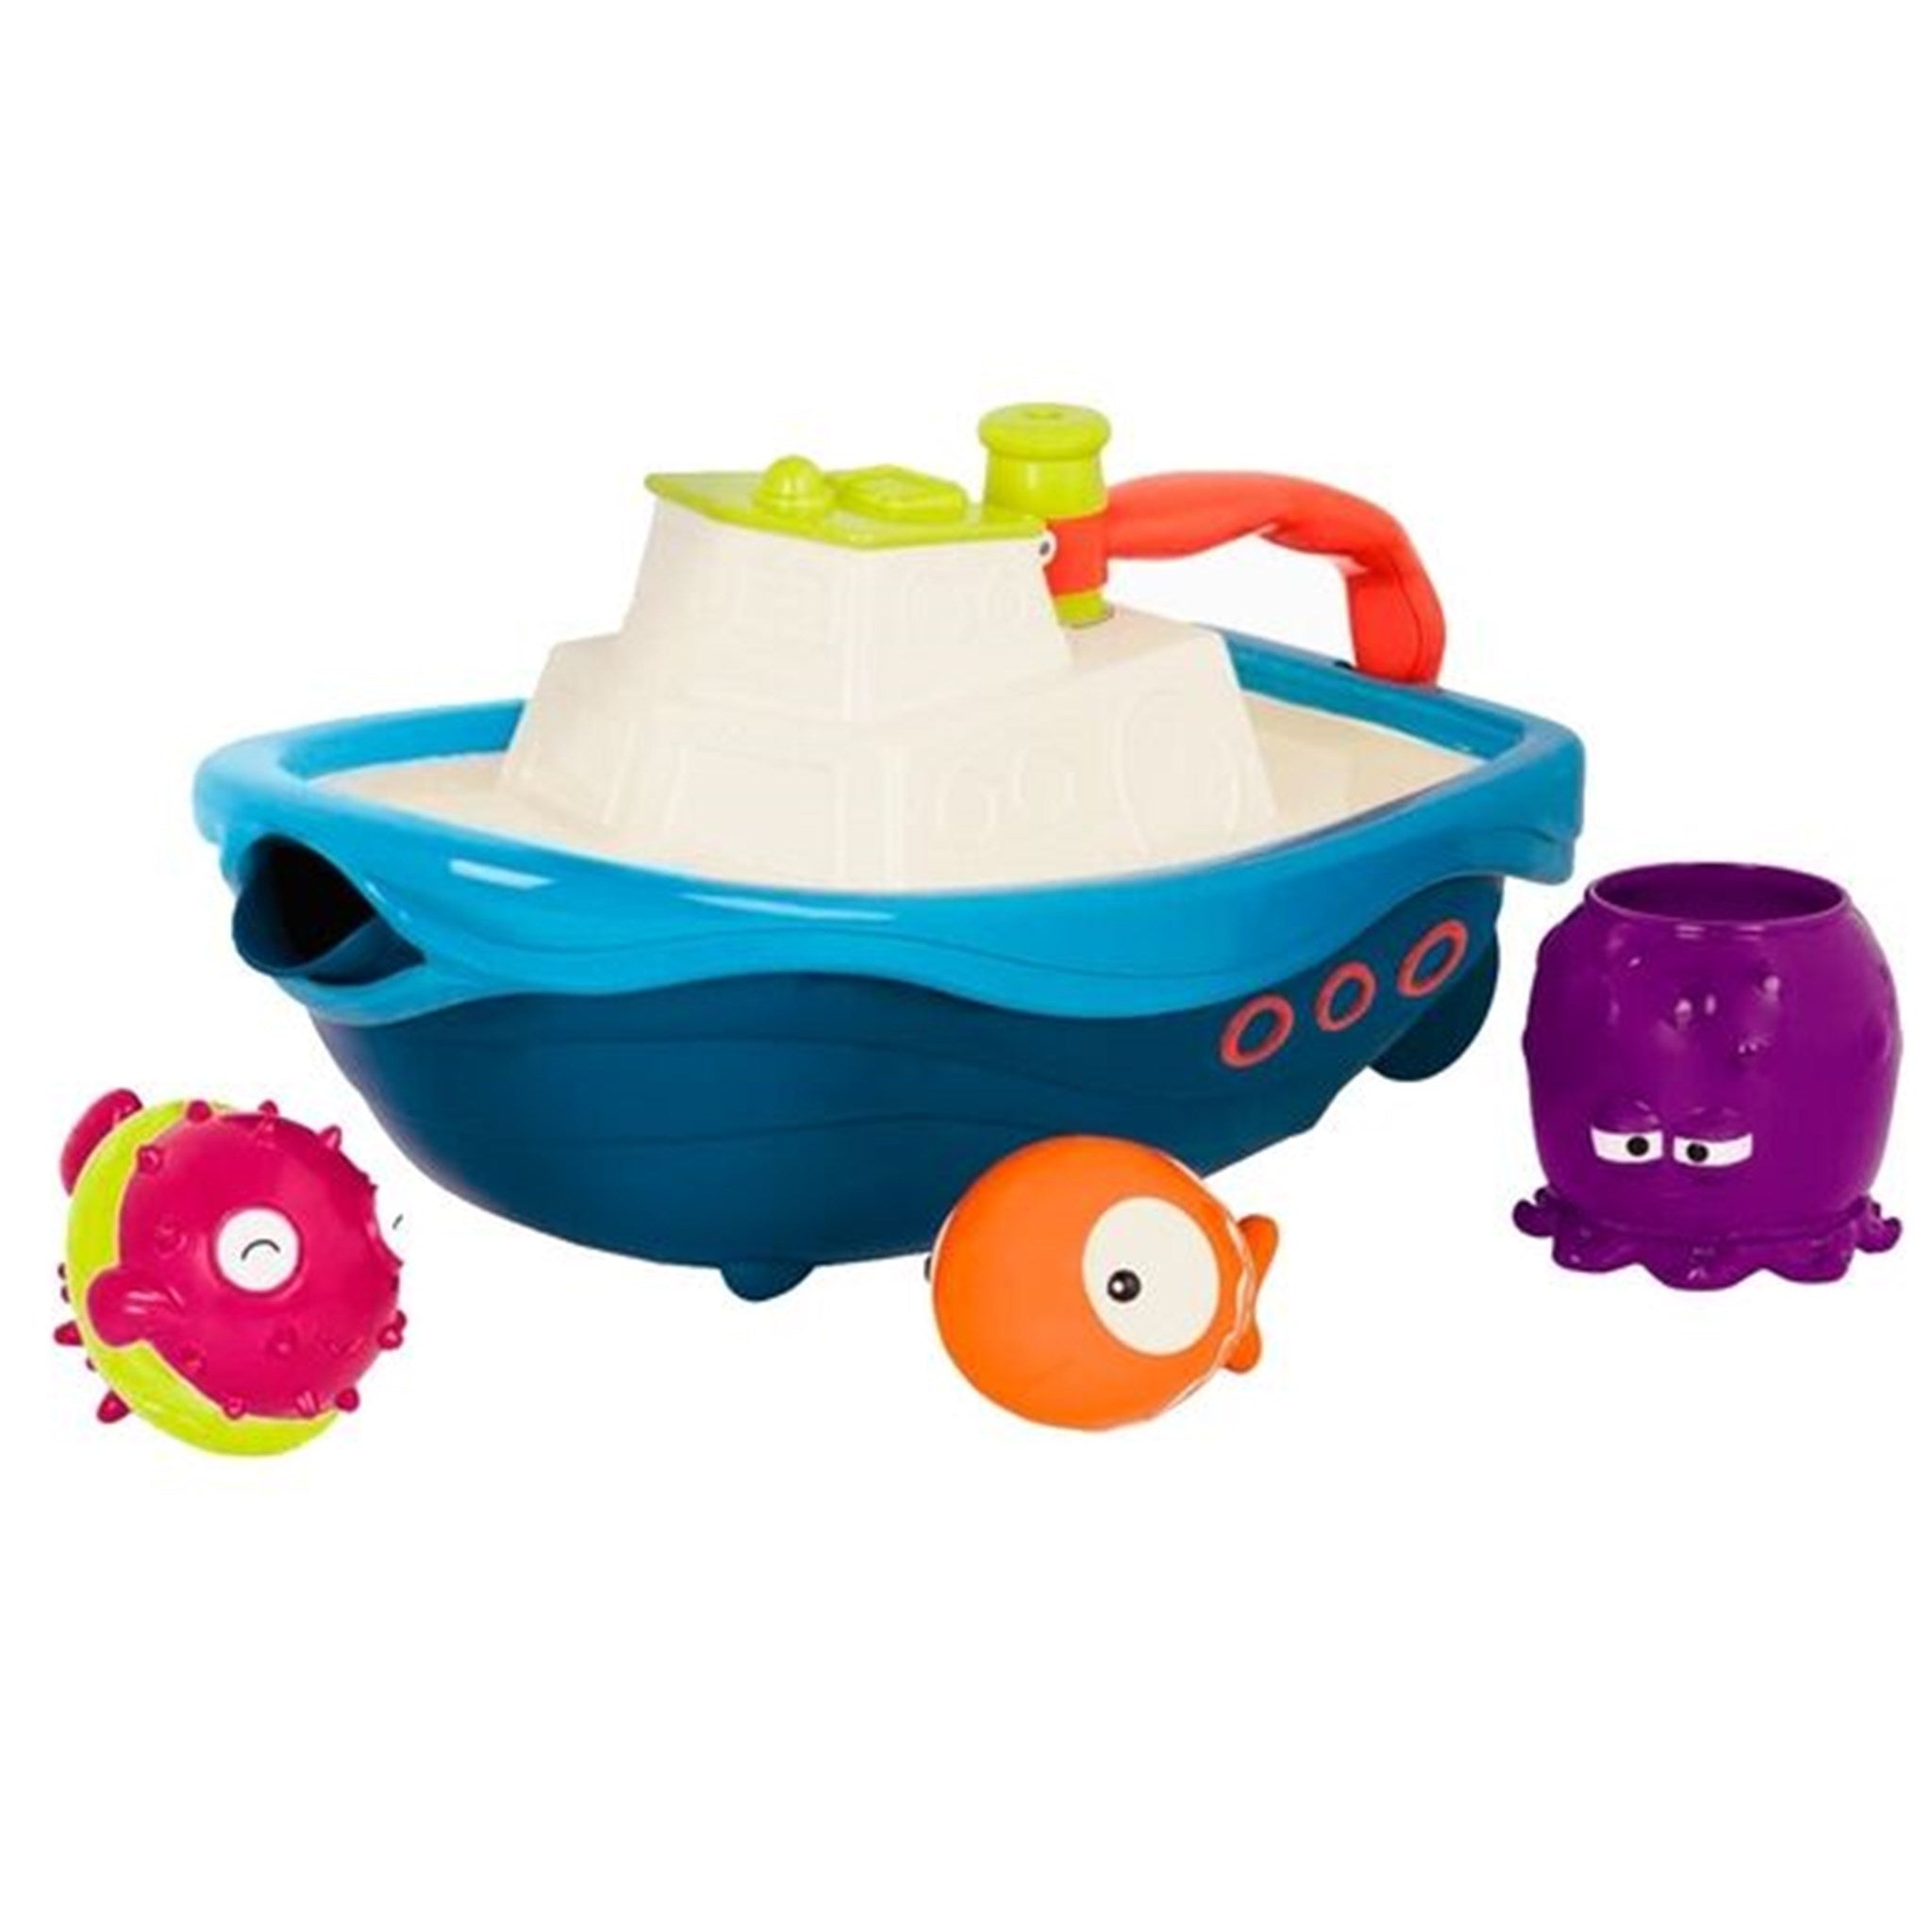 B-toys Boat with Bathtoy